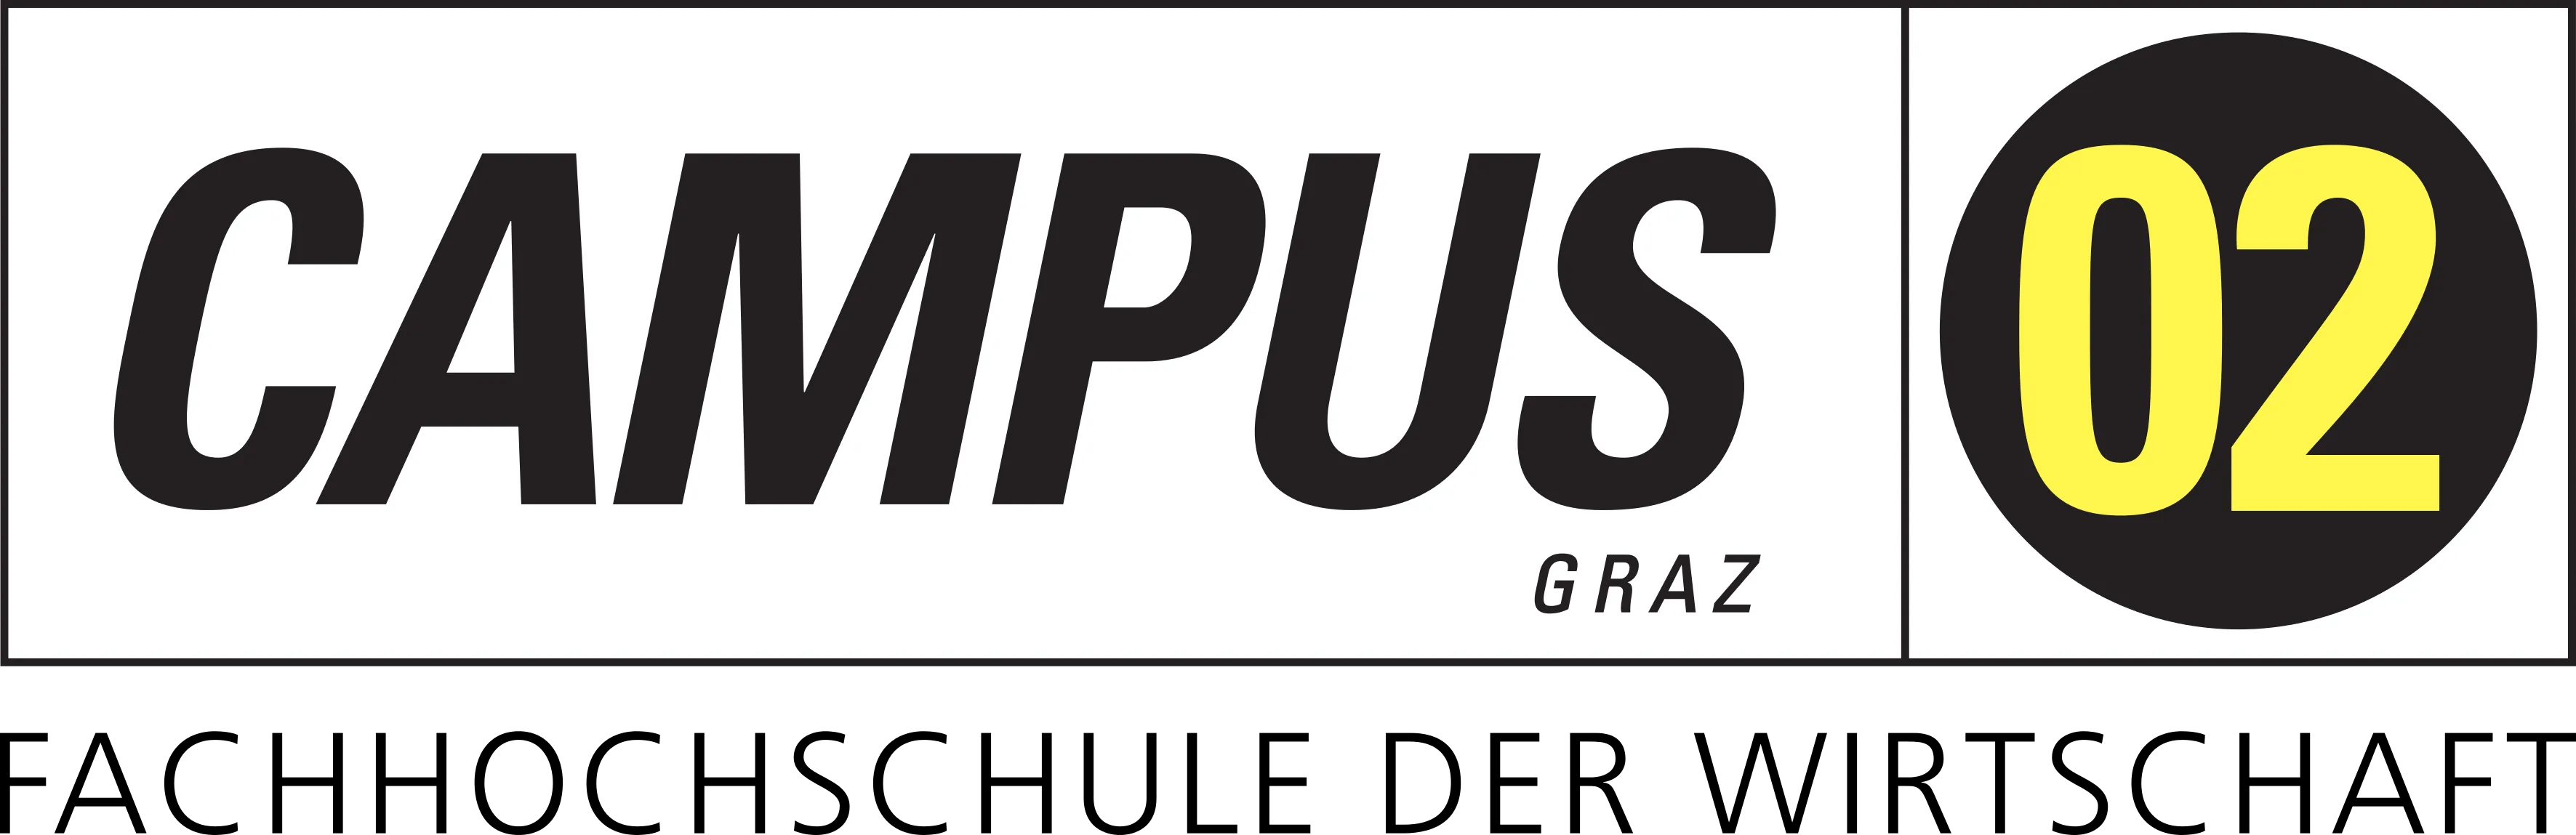 FH CAMPUS02 logo